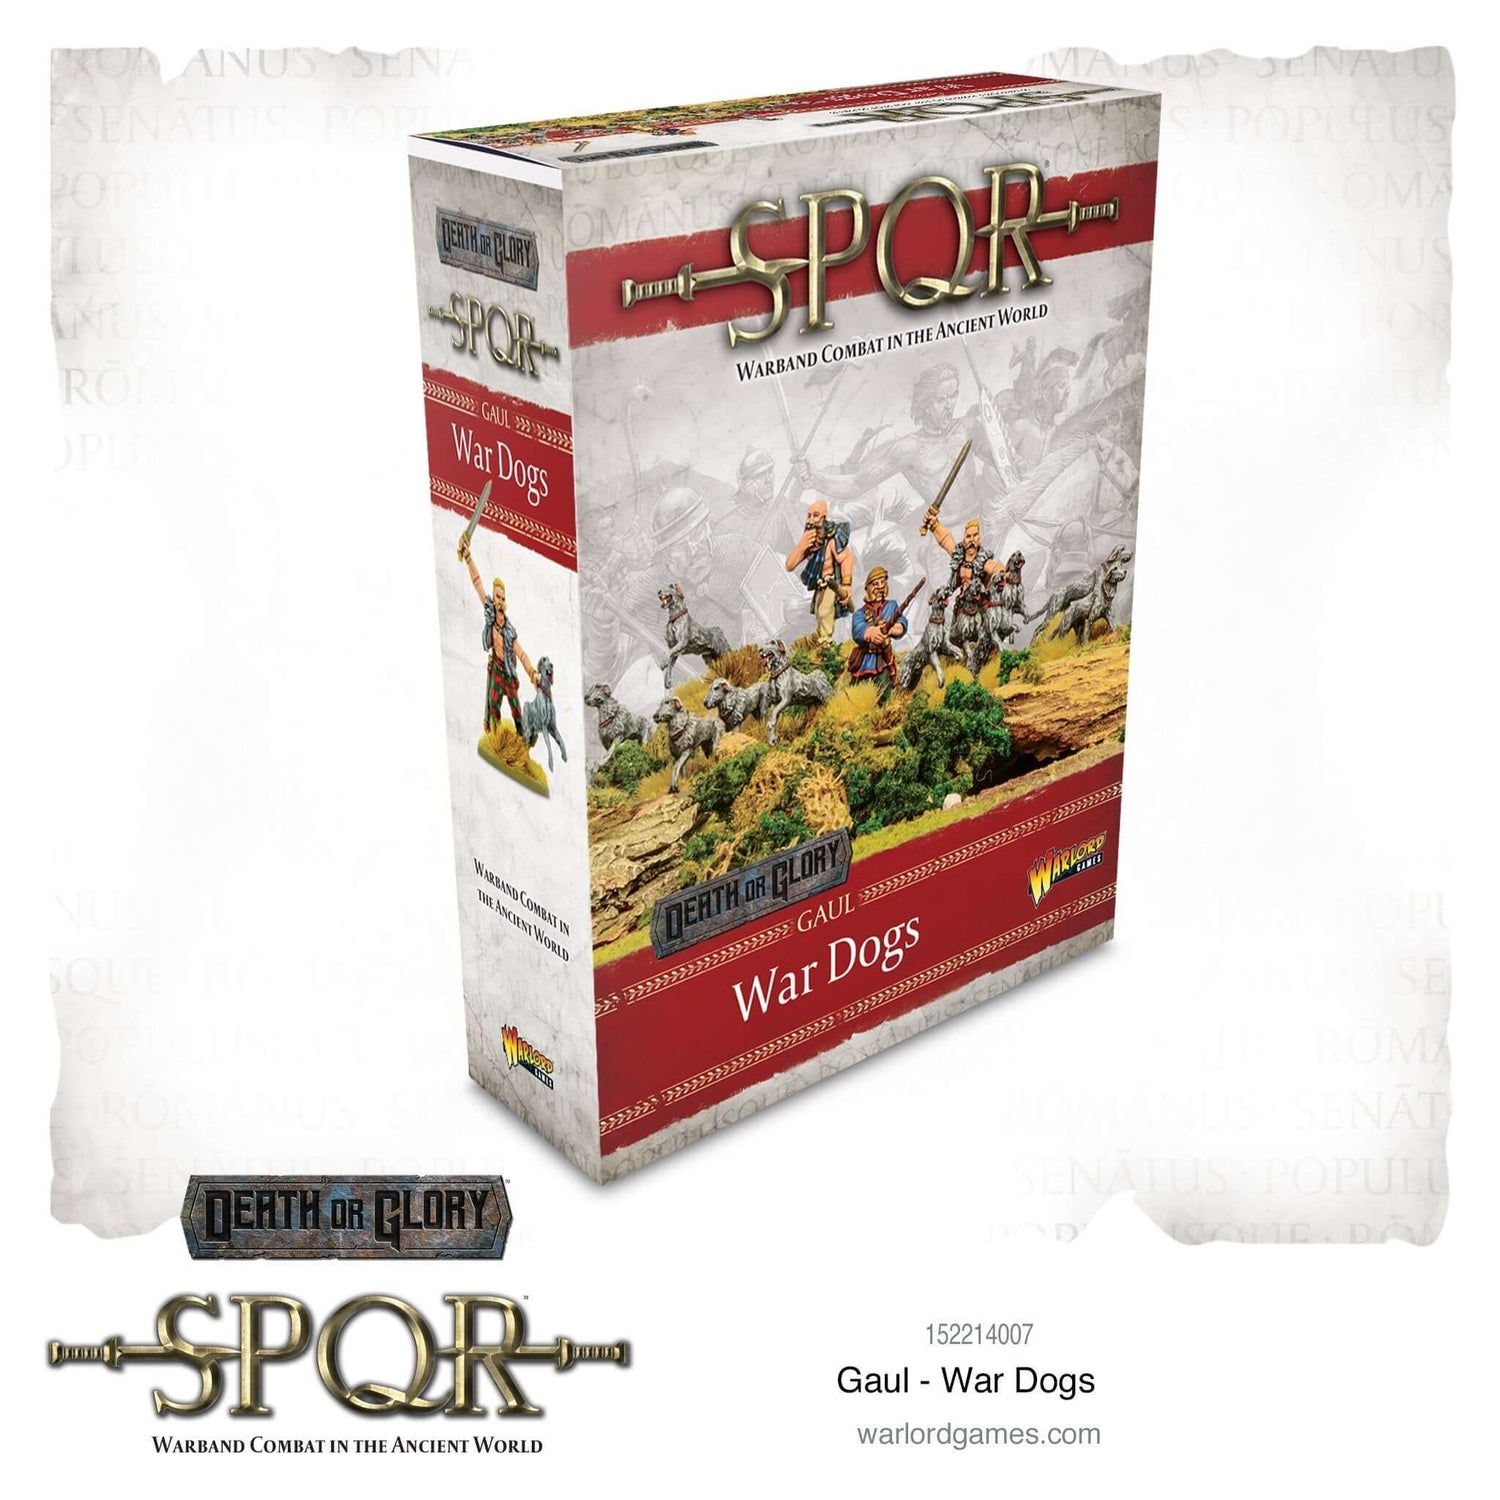 SPQR: Gaul - War Dogs by Warlord